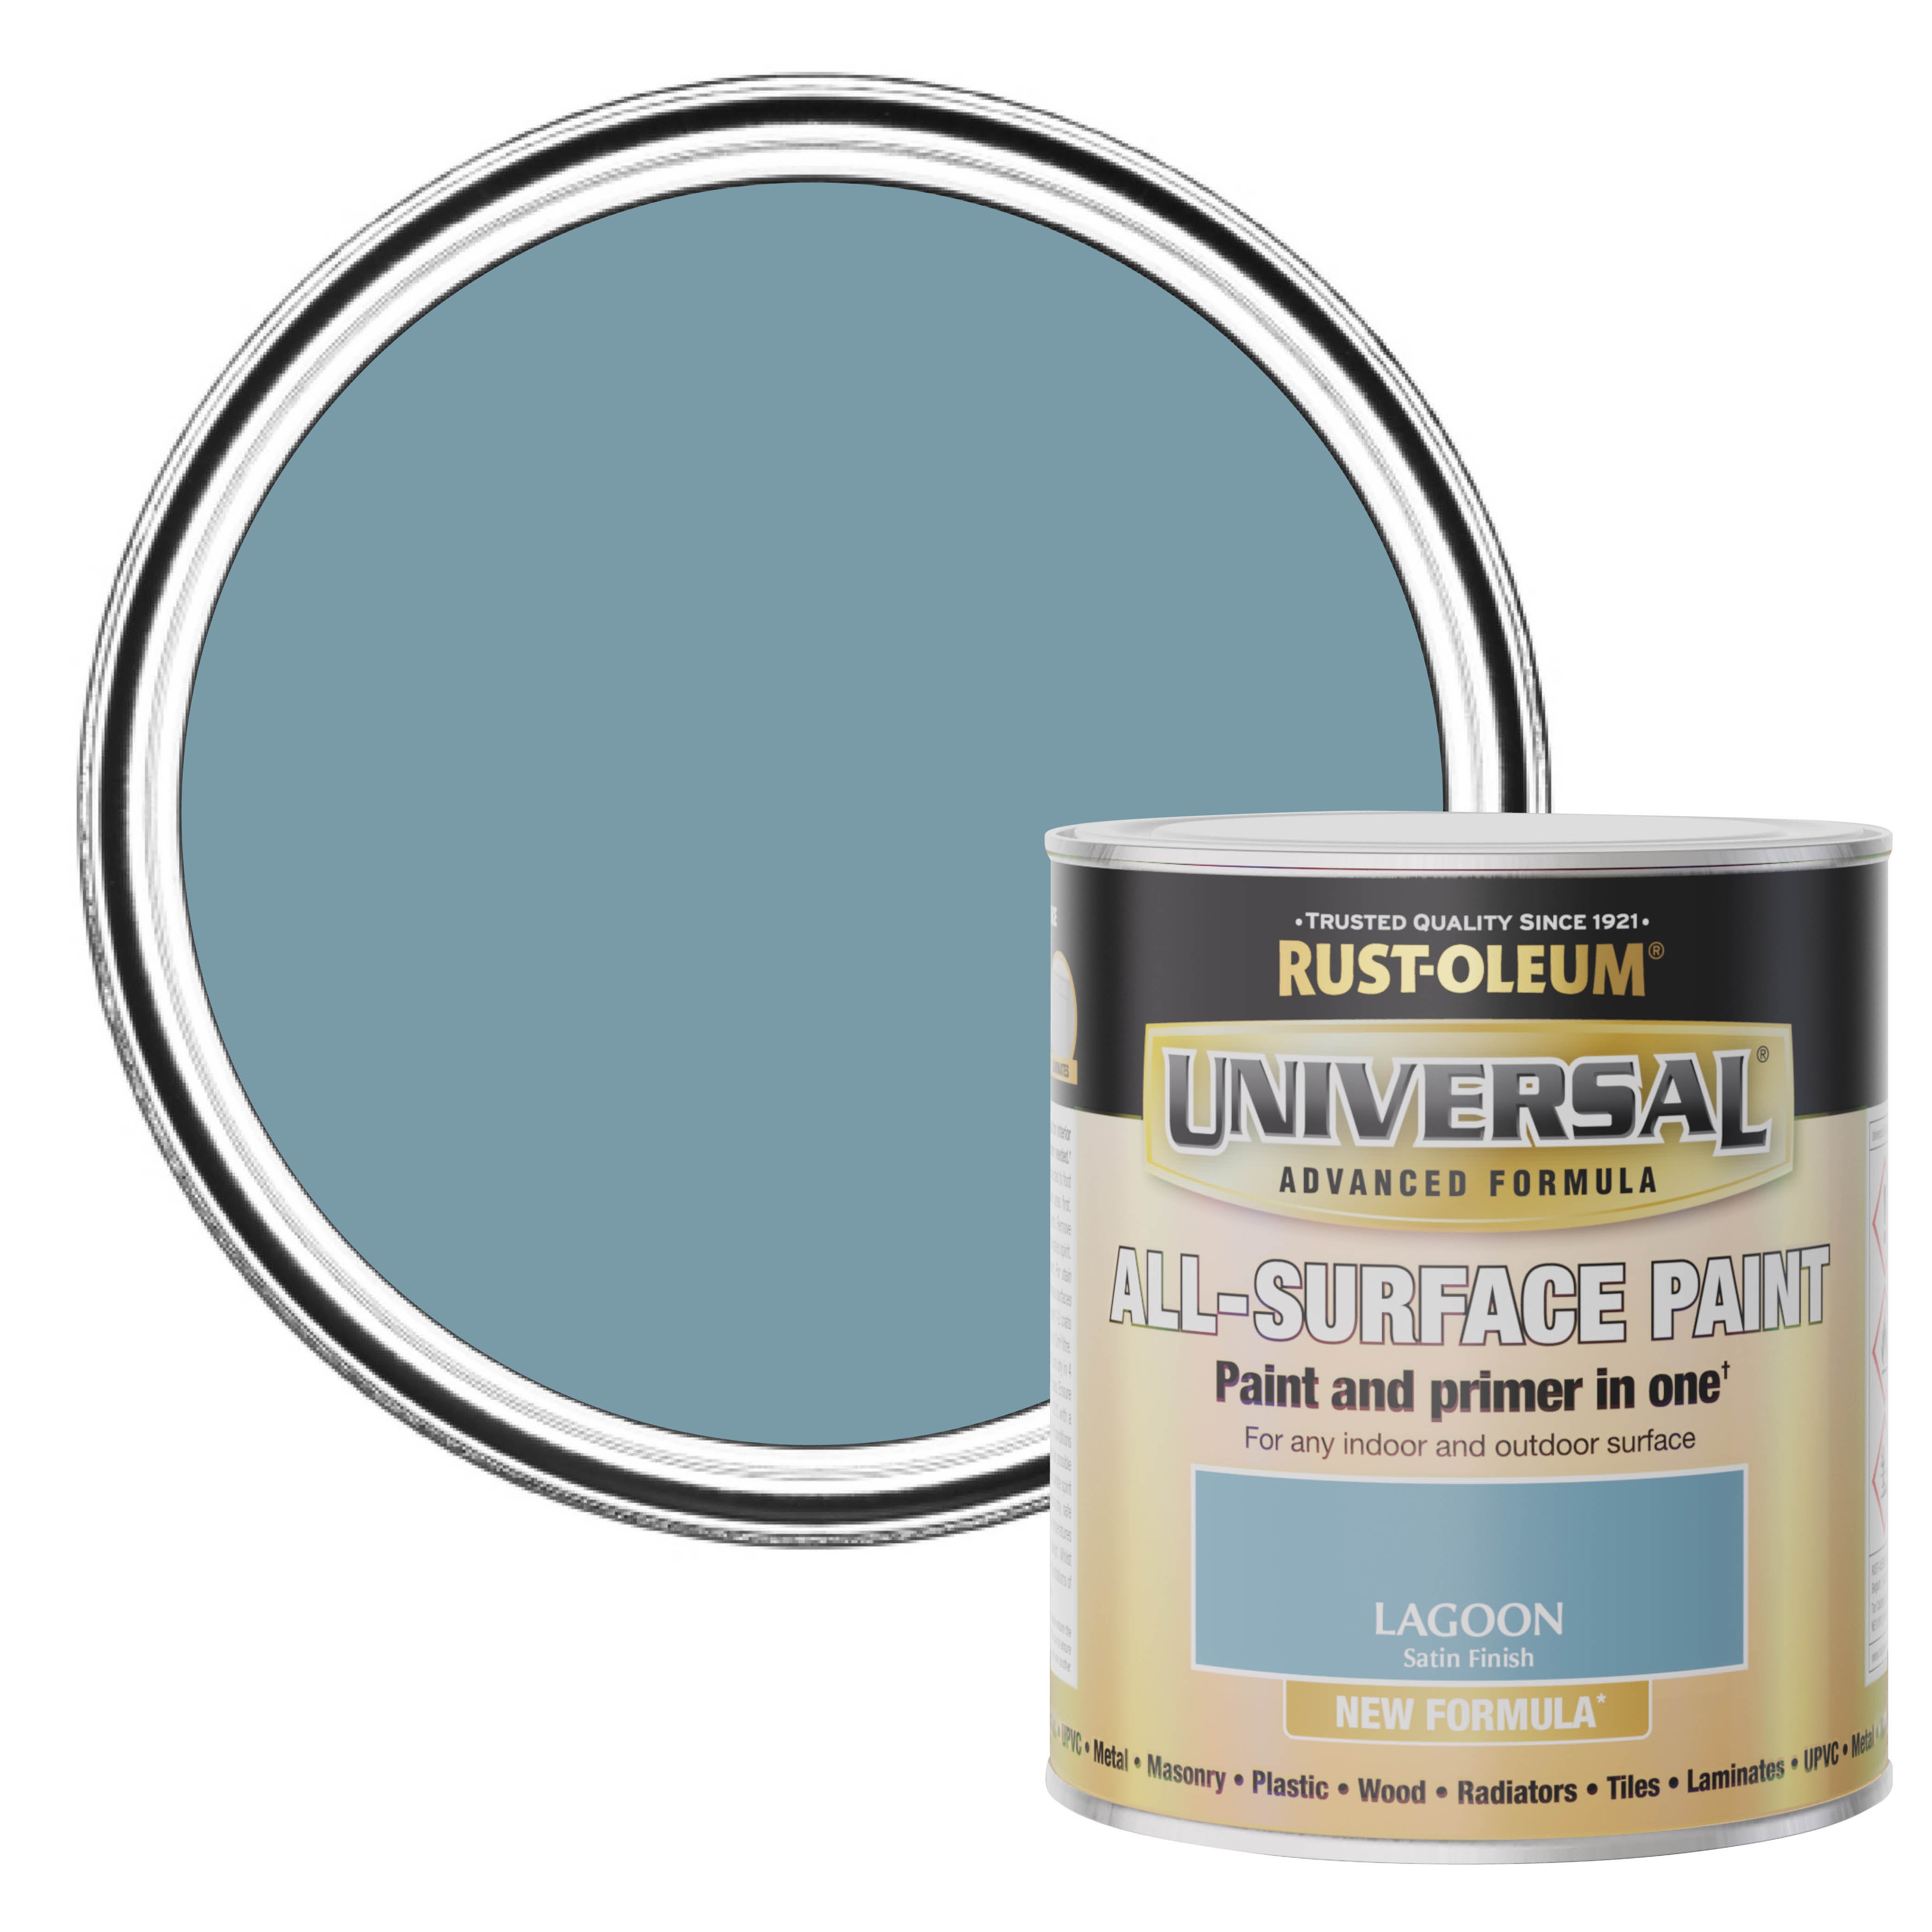 Rustoleum Painter's Touch Gloss White Spray Paint